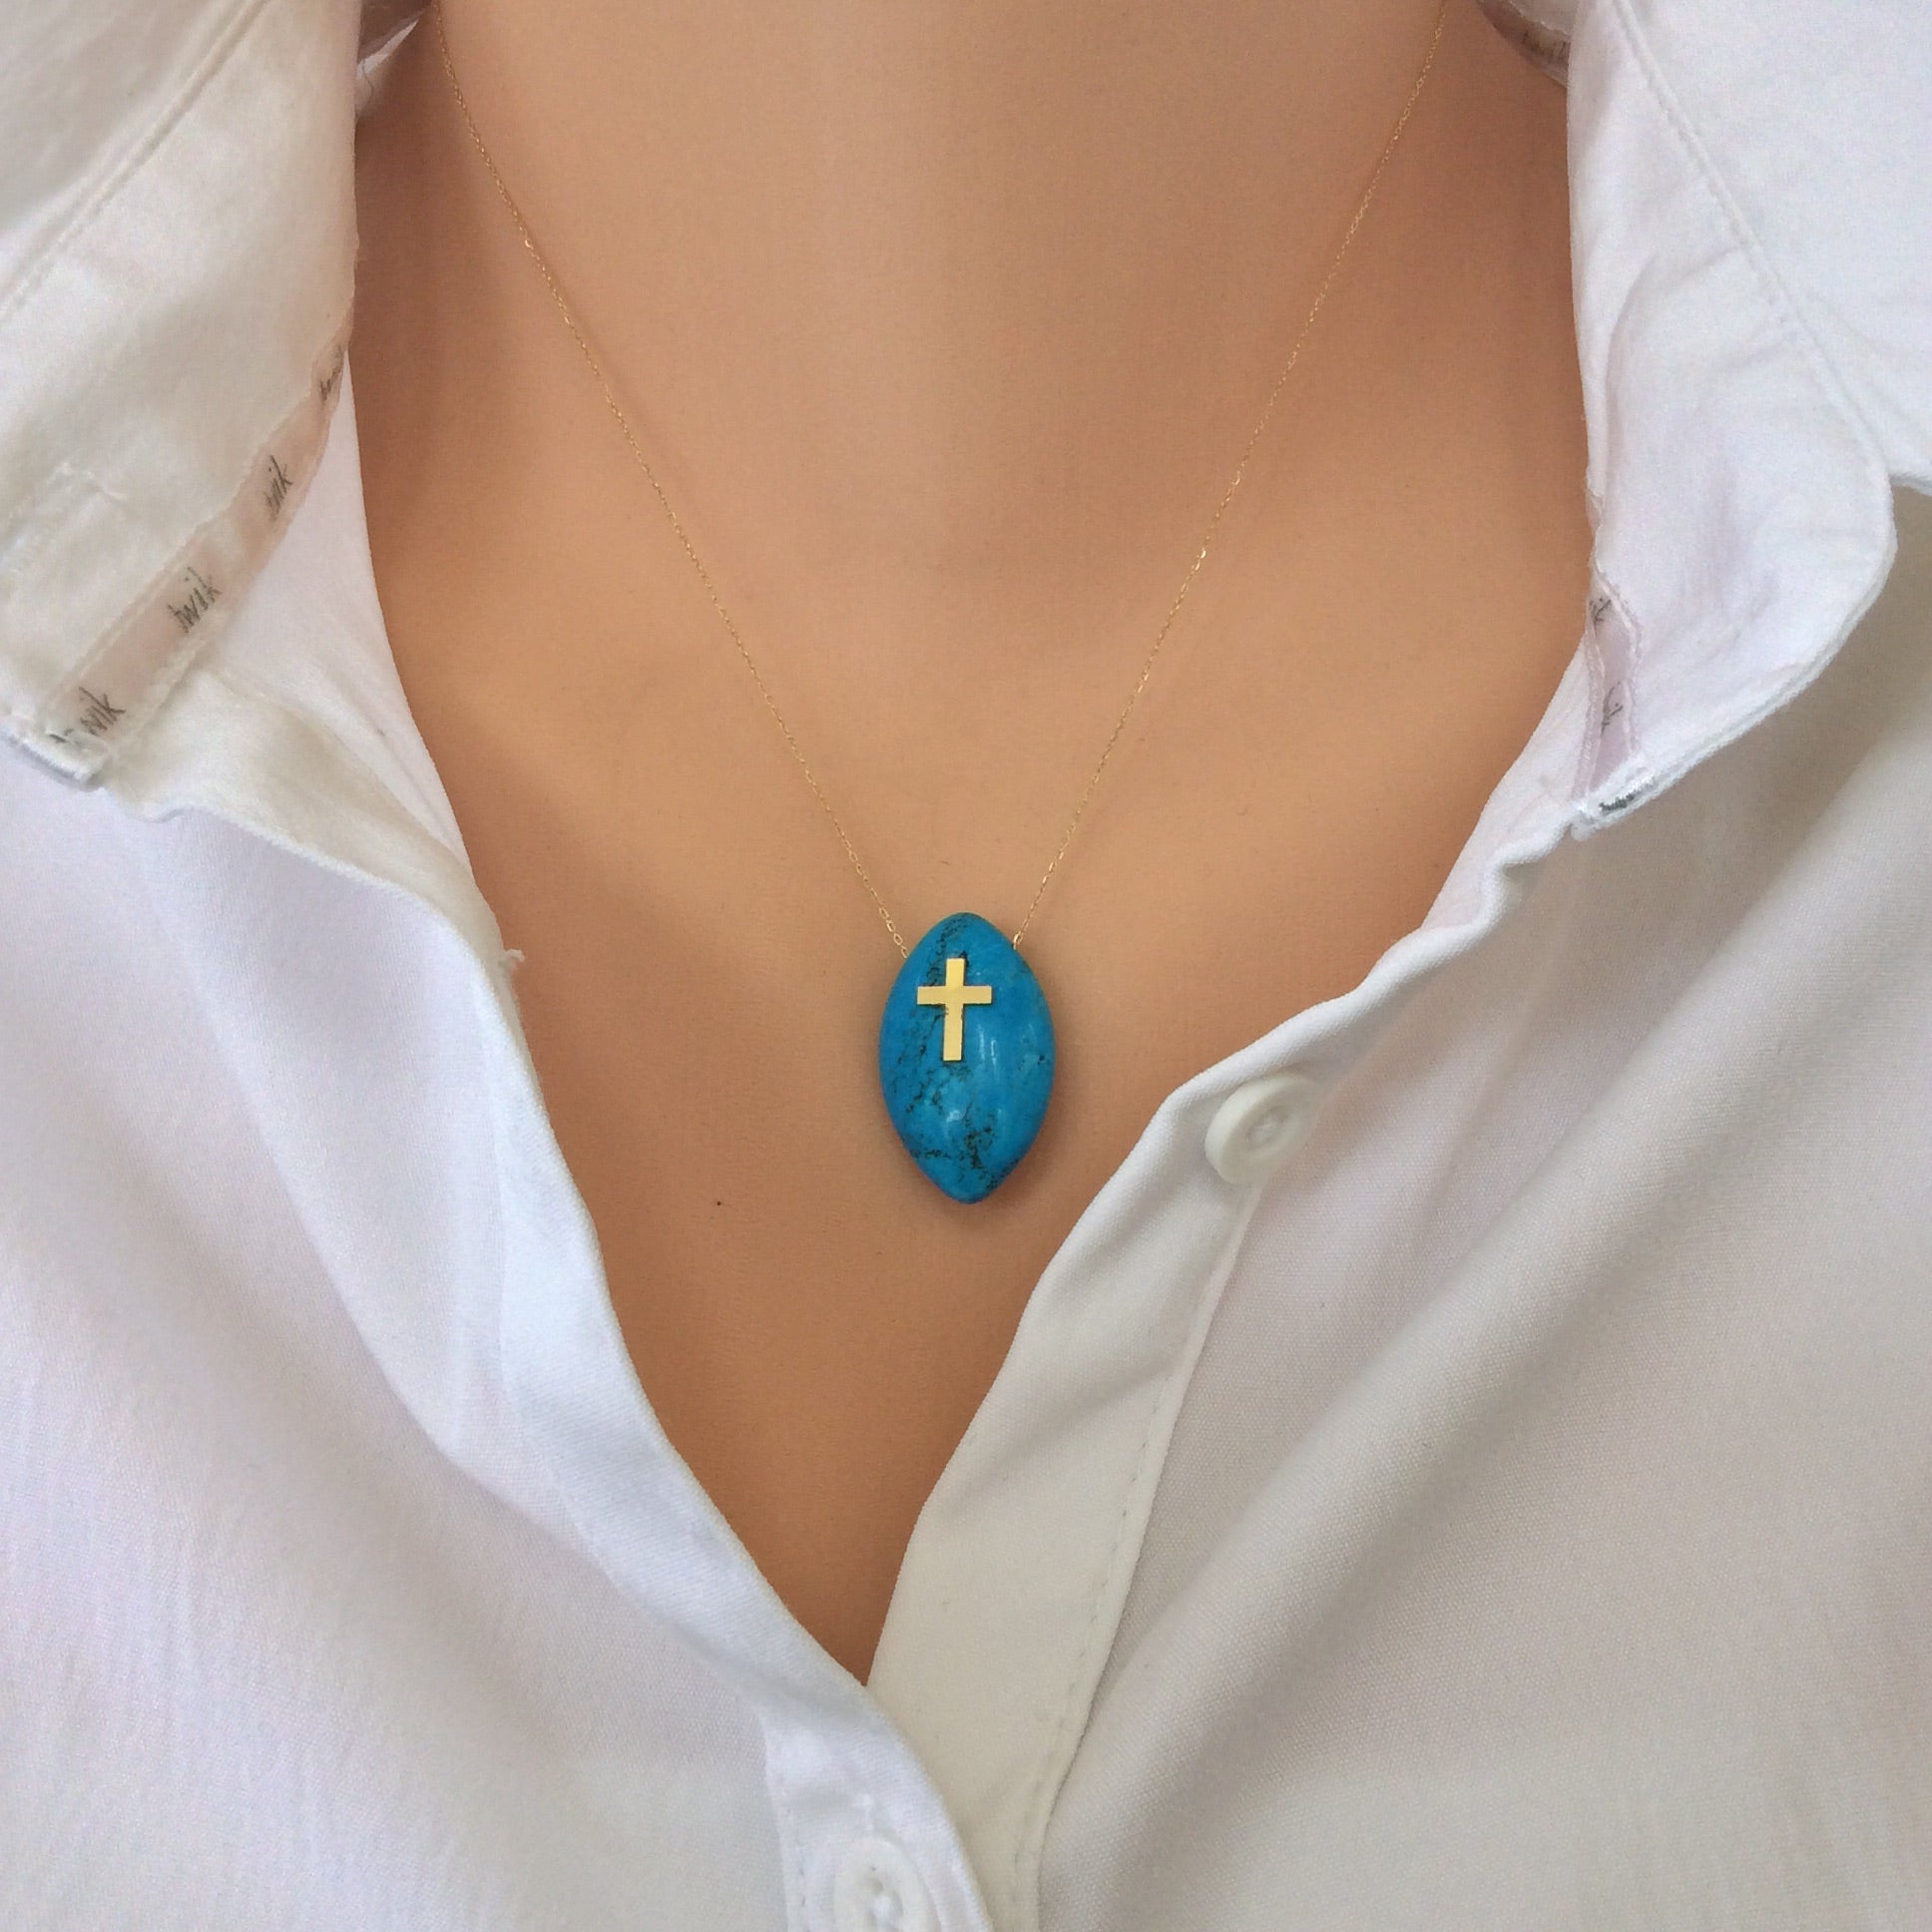 Solid Gold 18K Minimalist Turquoise Cross Pendant on Thin Chain